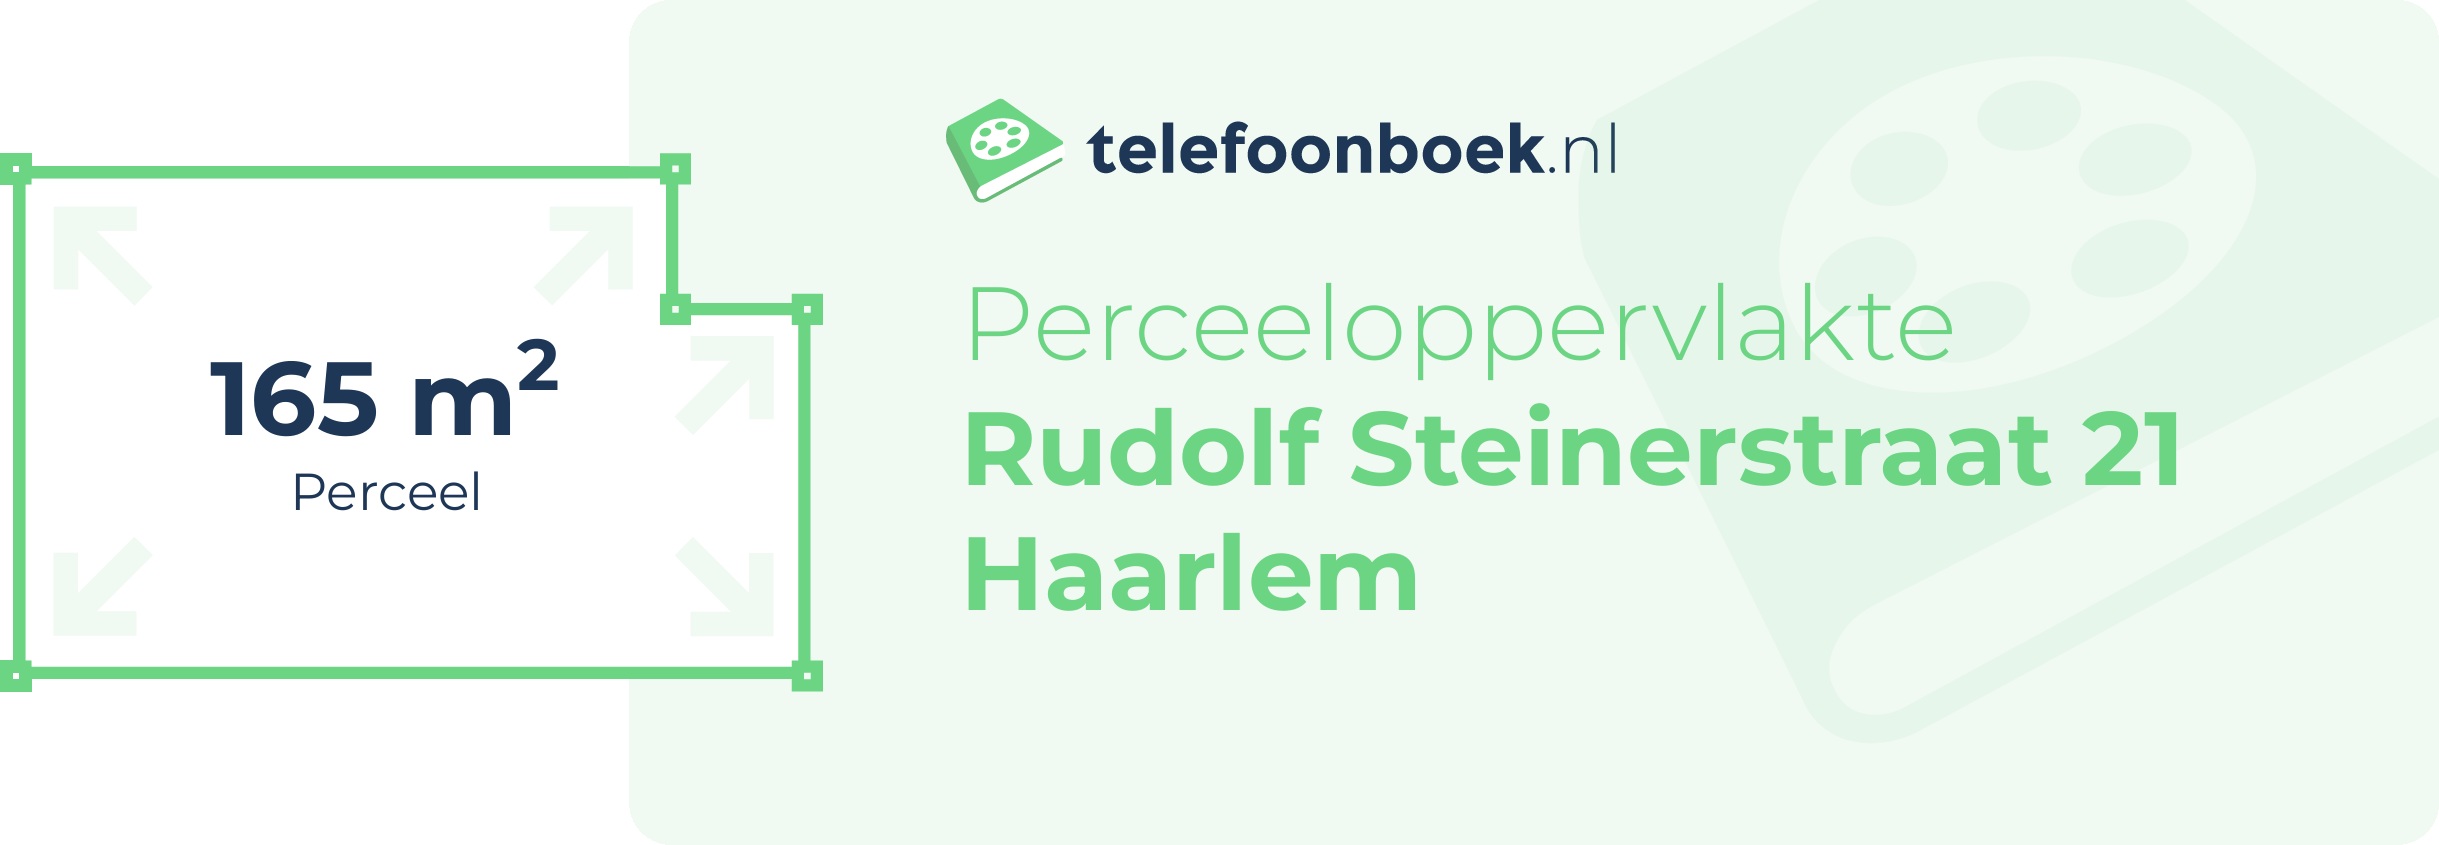 Perceeloppervlakte Rudolf Steinerstraat 21 Haarlem